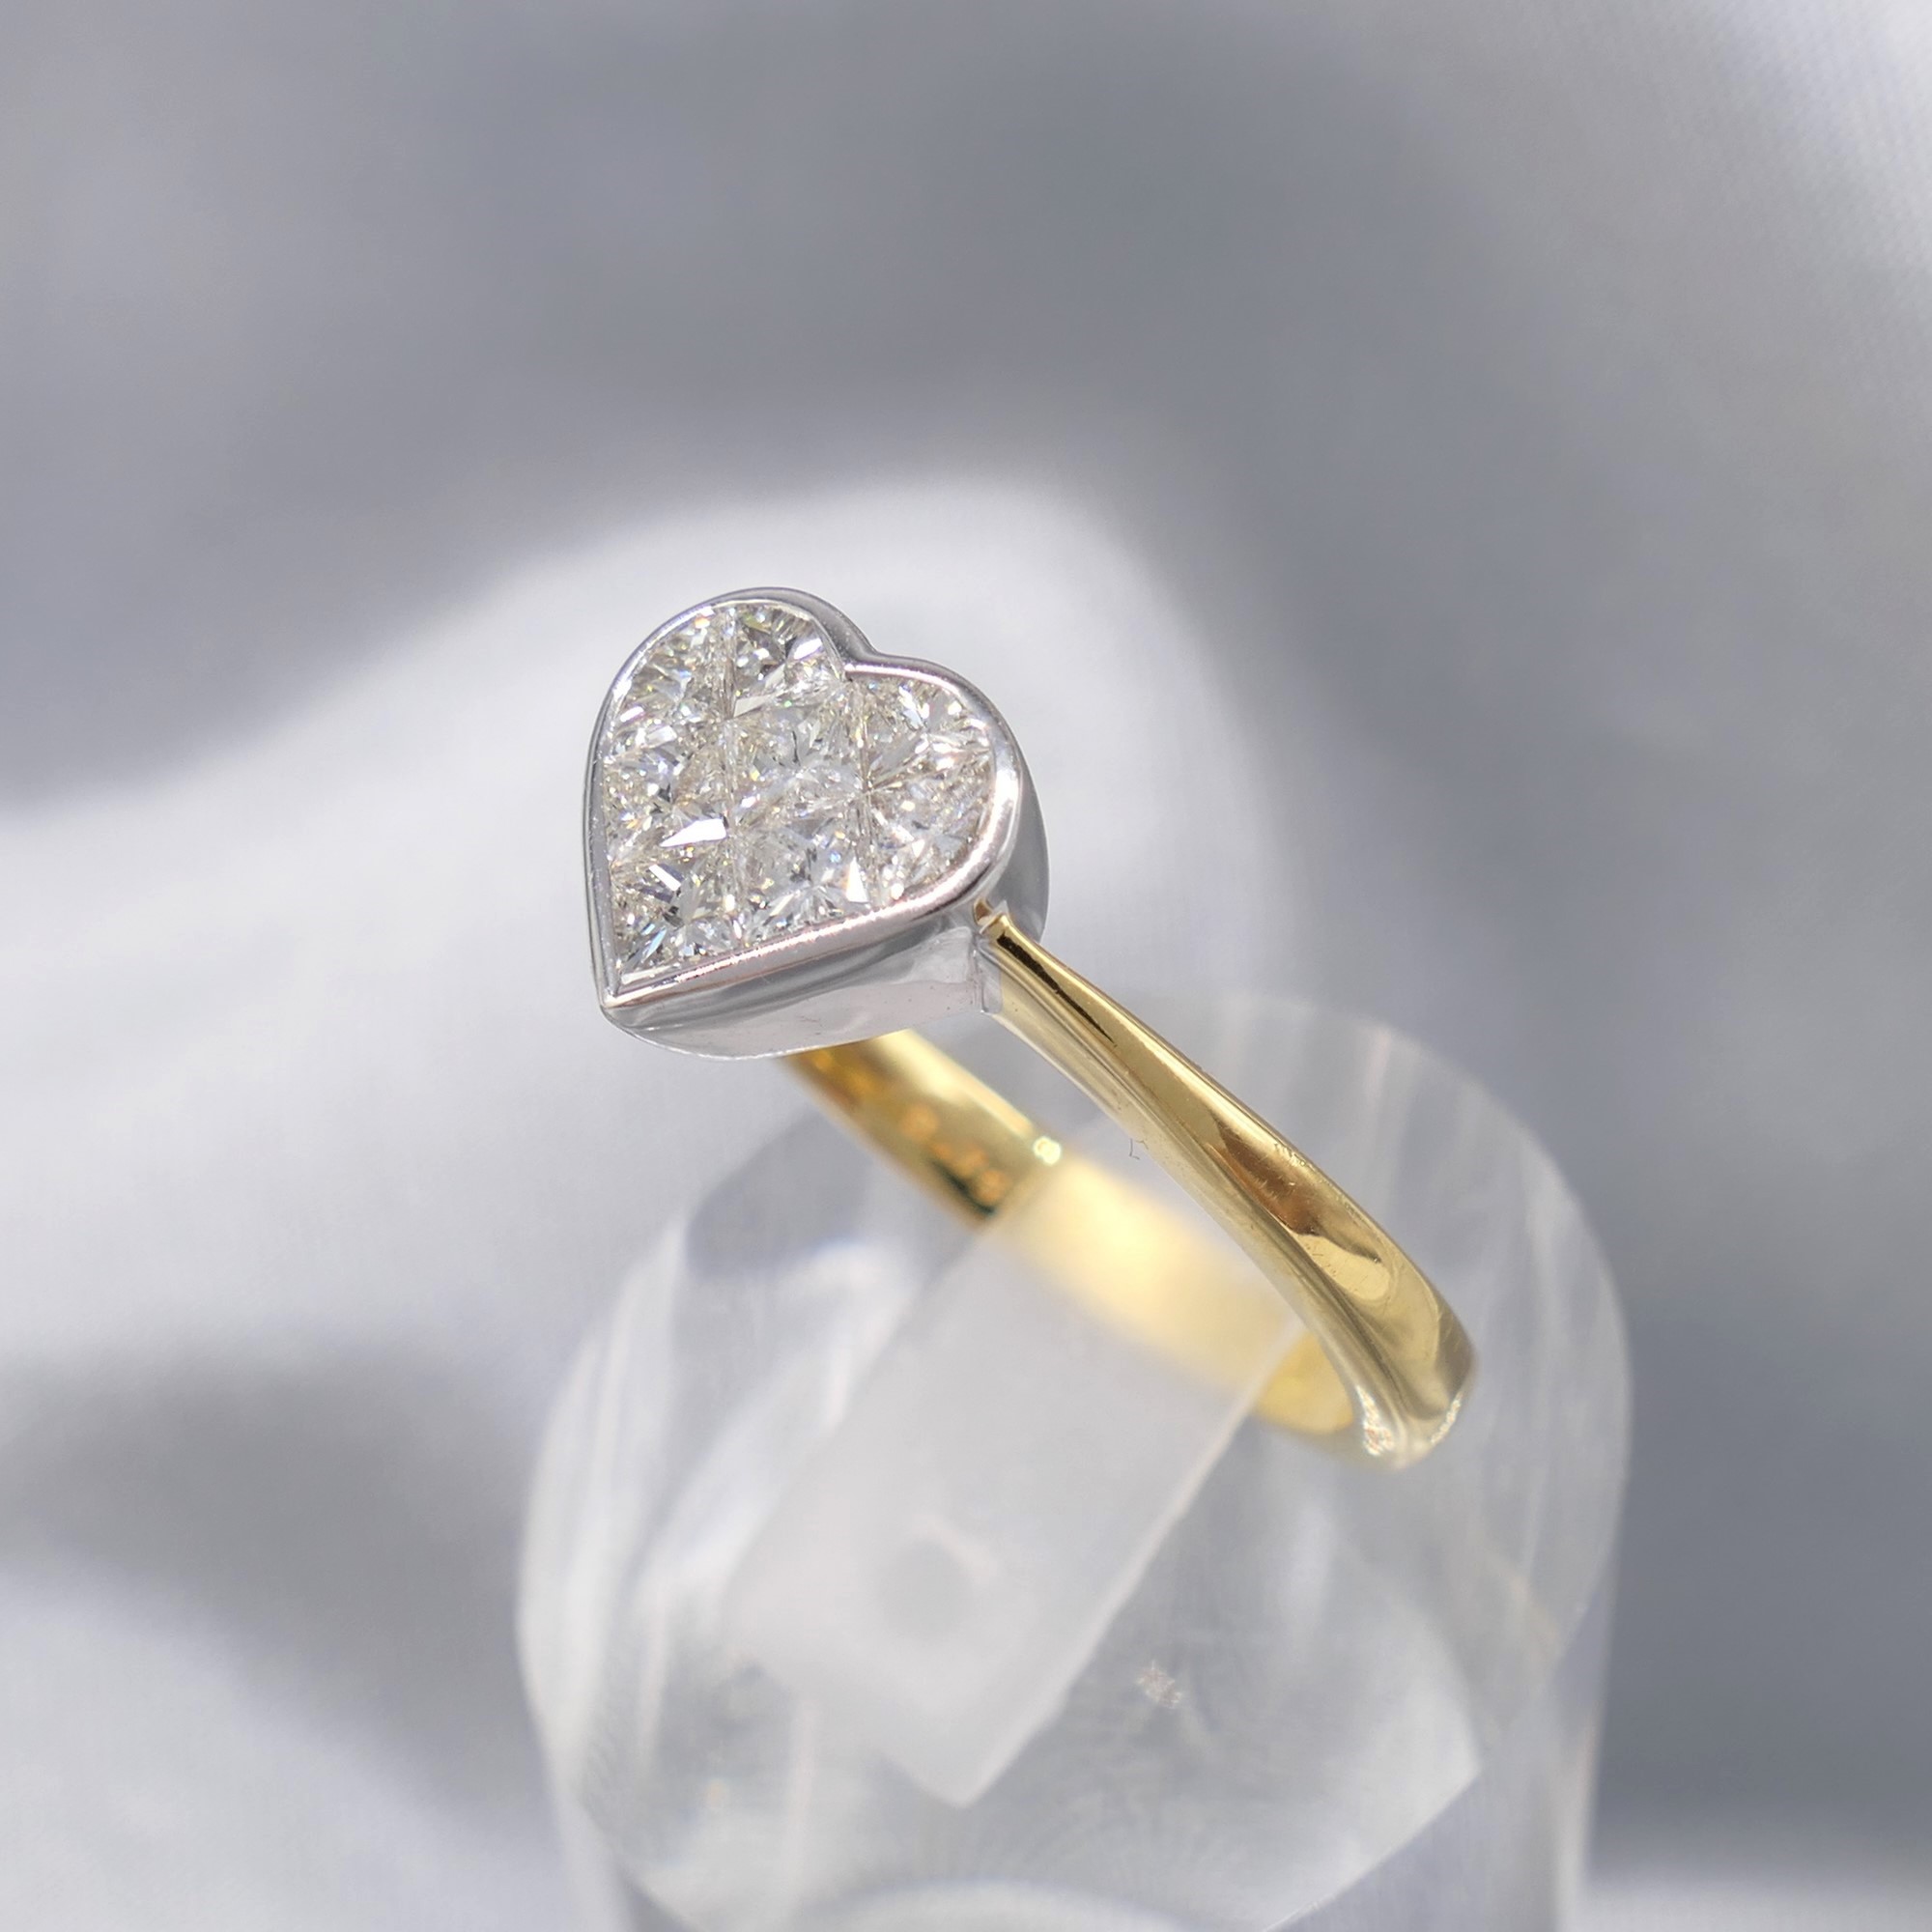 18ct Yellow Gold 0.75 Carat Heart-Shaped Princess-Cut Diamond Ring - Image 2 of 7